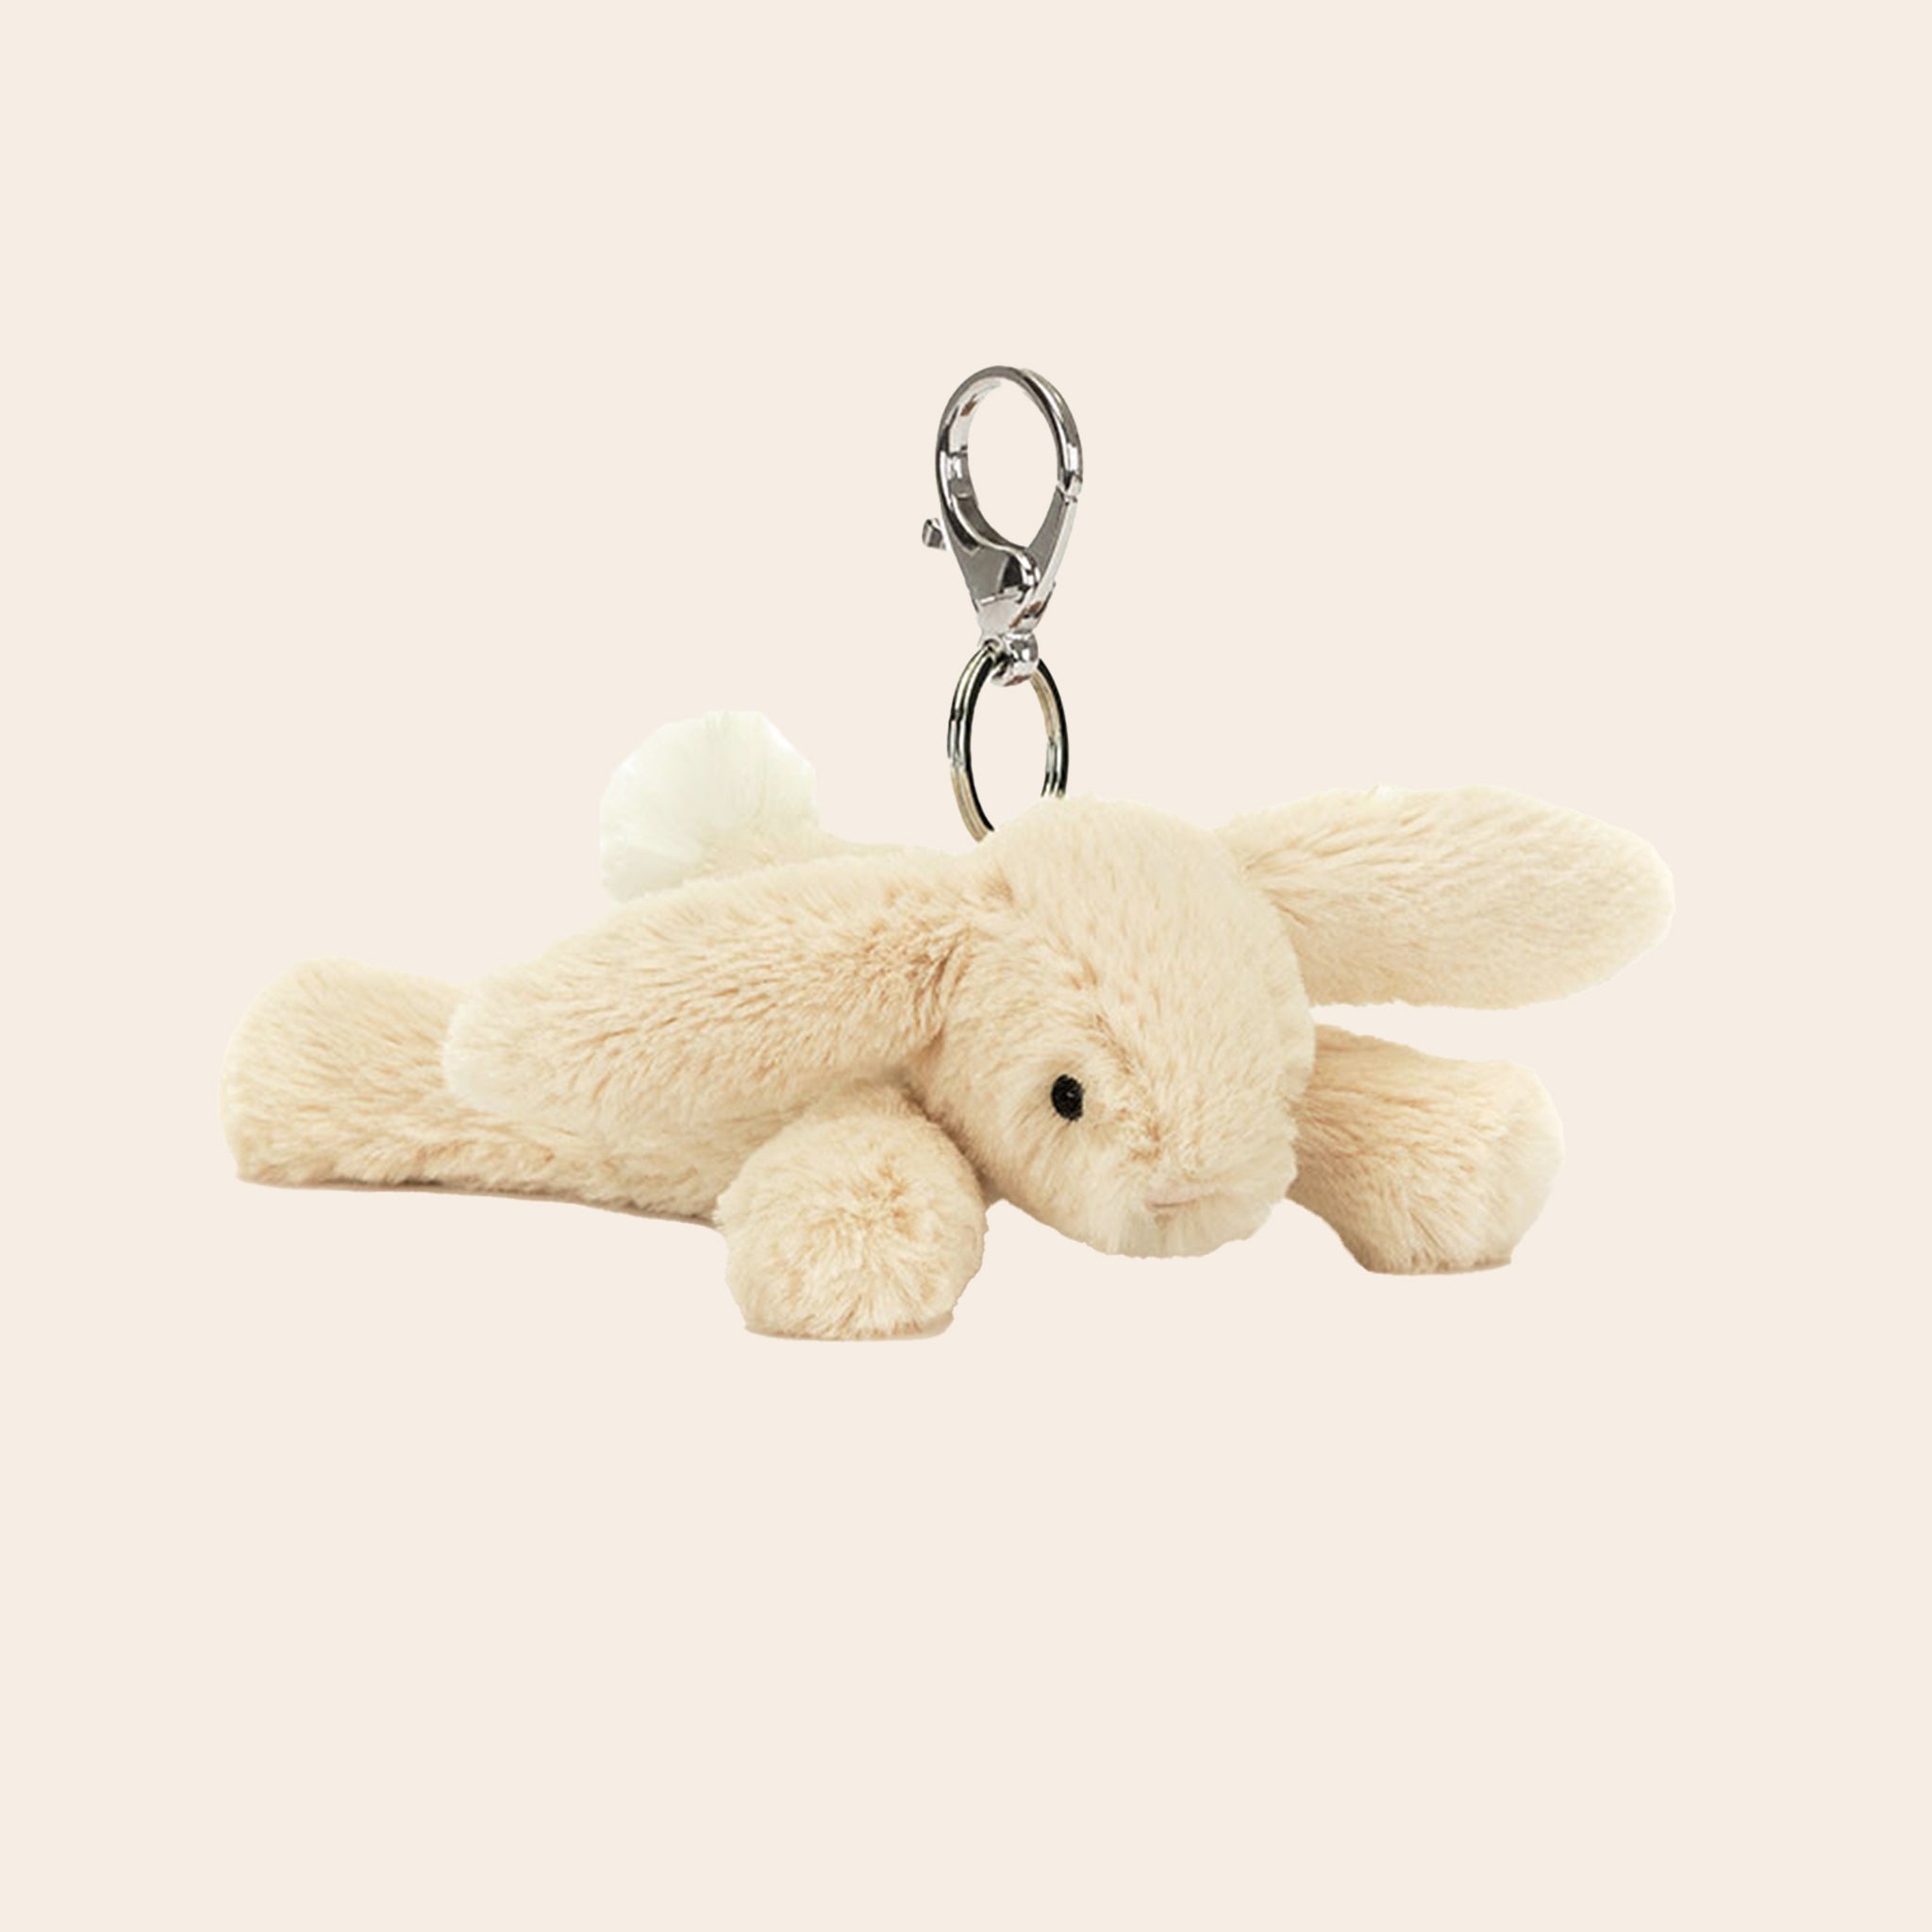 A mini bunny stuffed animal on a silver keychain. 